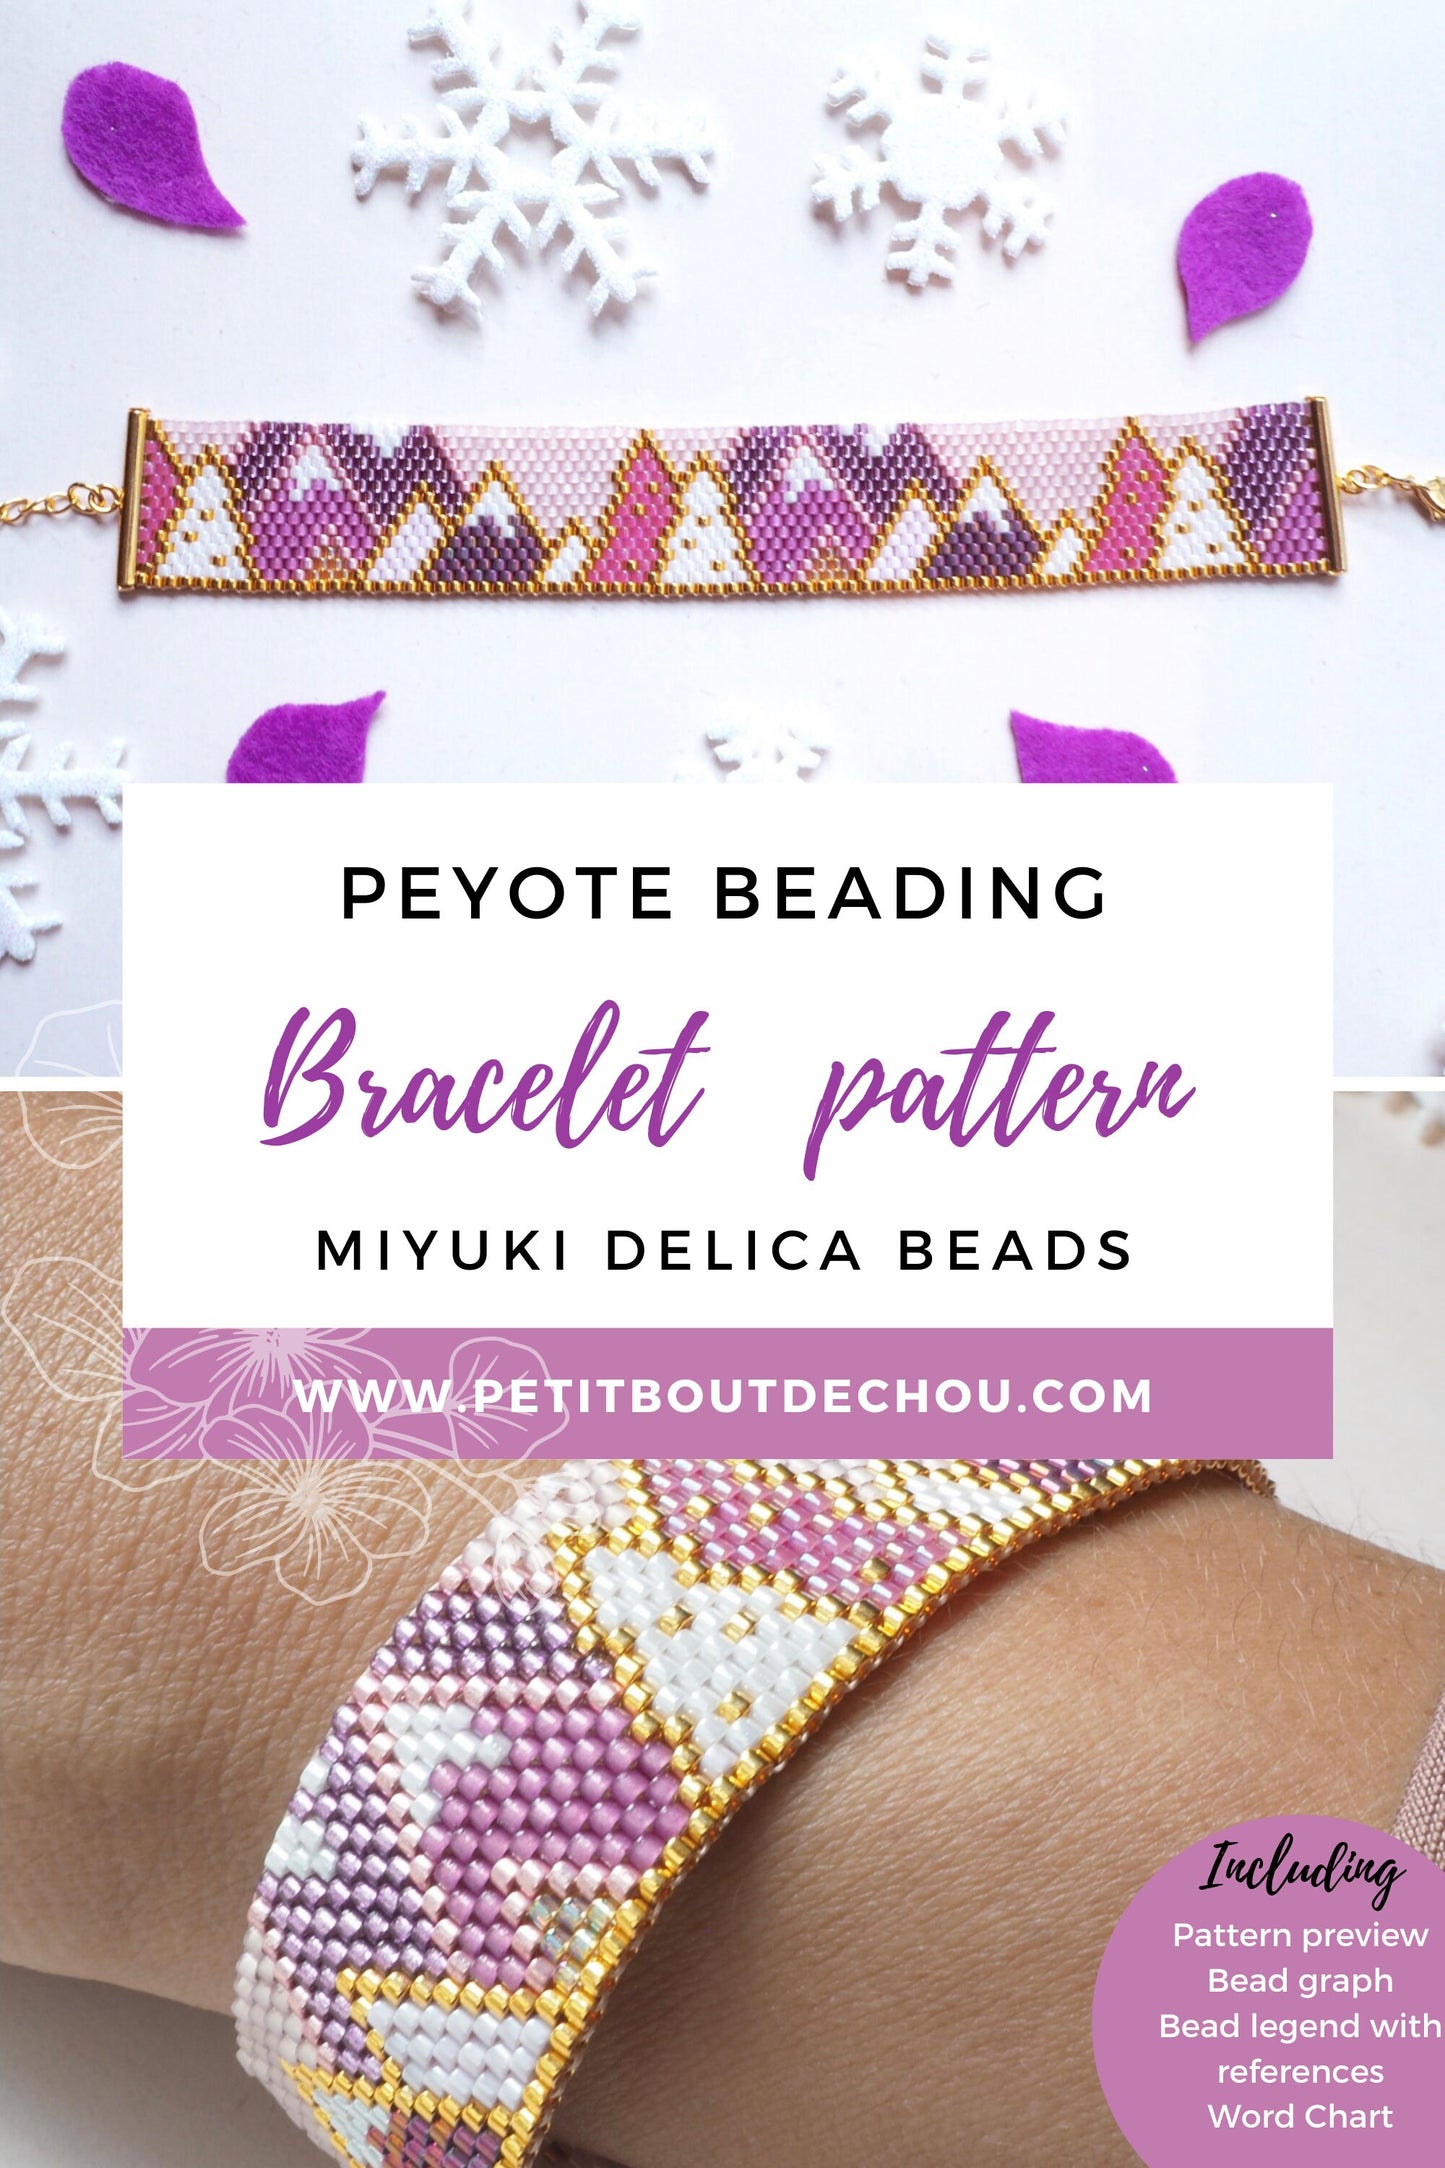 Grille de tissage Miyuki bracelet peyote impair - Sapins de Noel